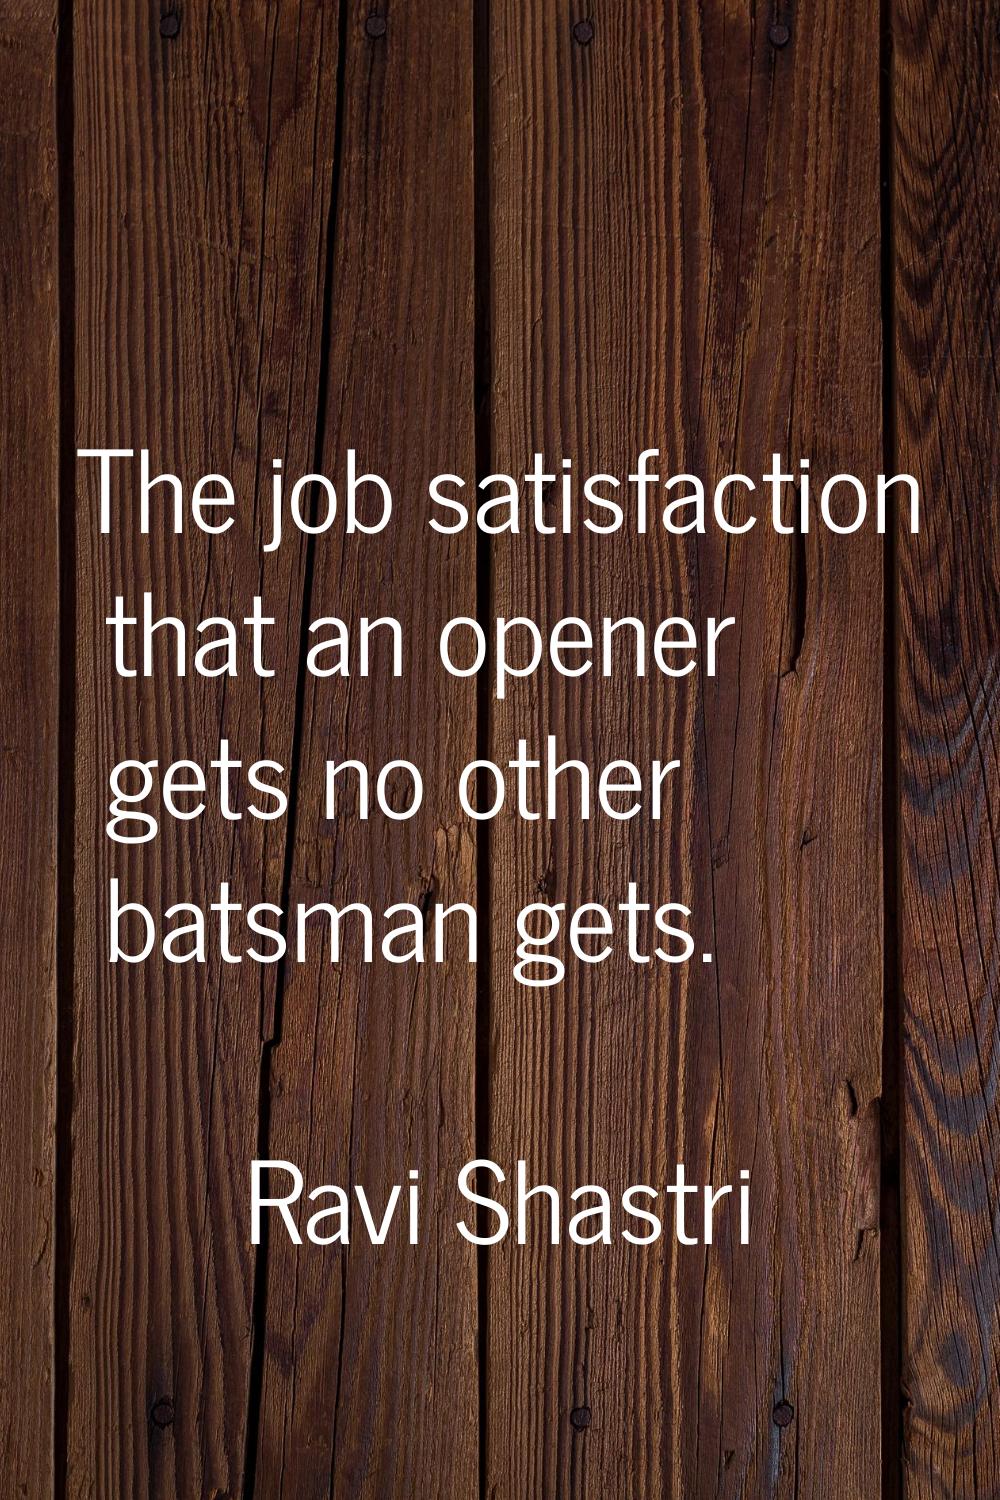 The job satisfaction that an opener gets no other batsman gets.